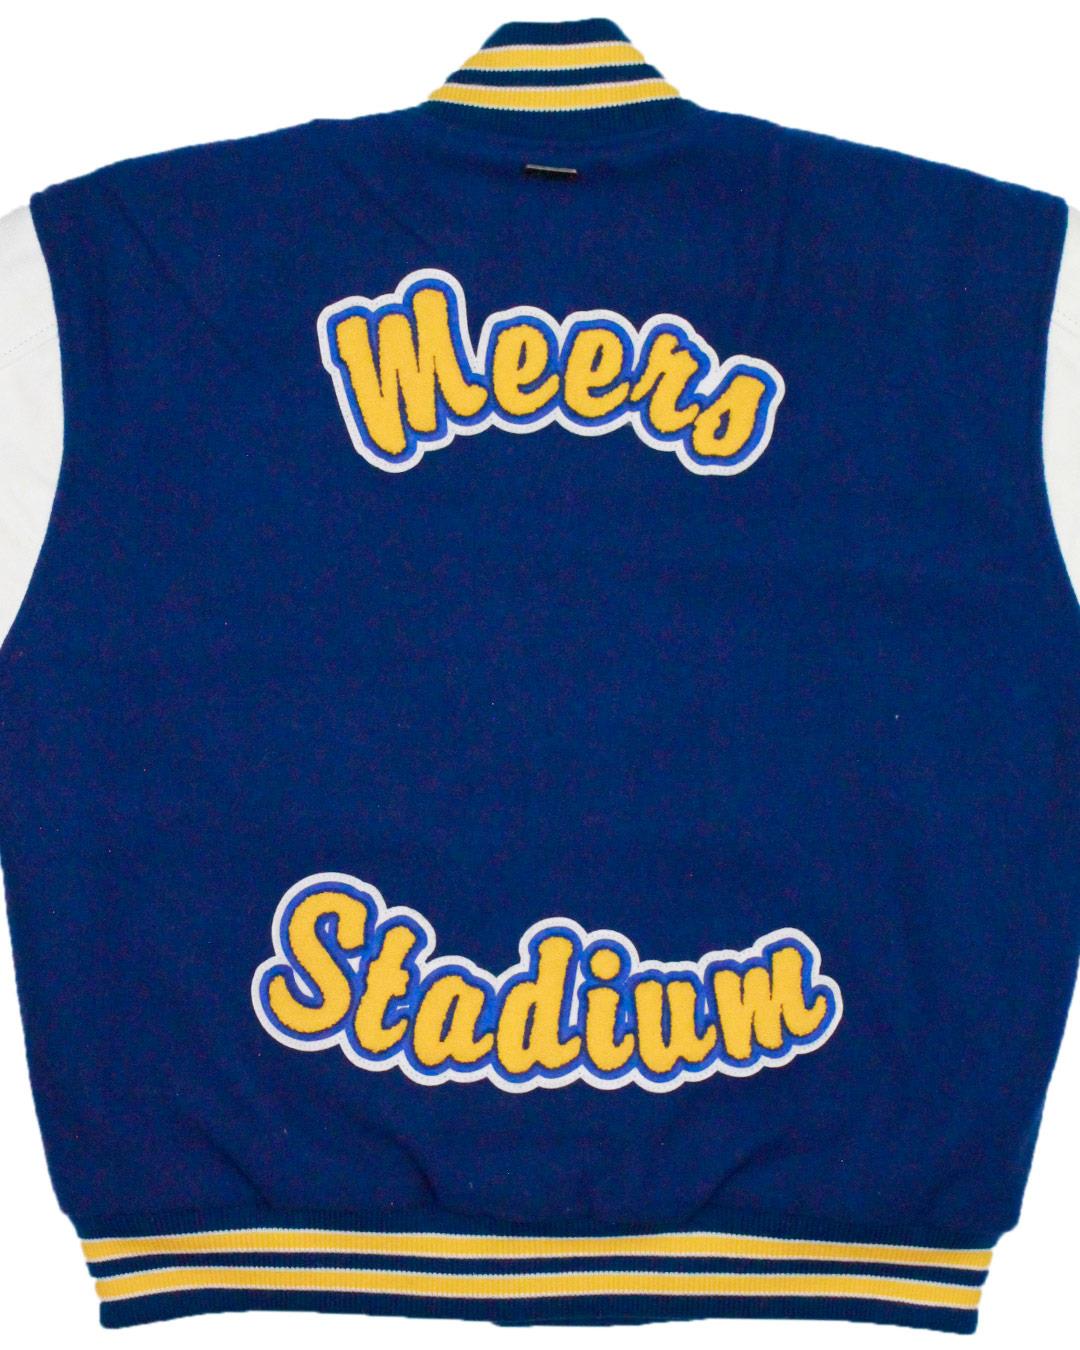 Stadium High School Tigers Varsity Jacket, Tacoma, WA - Back